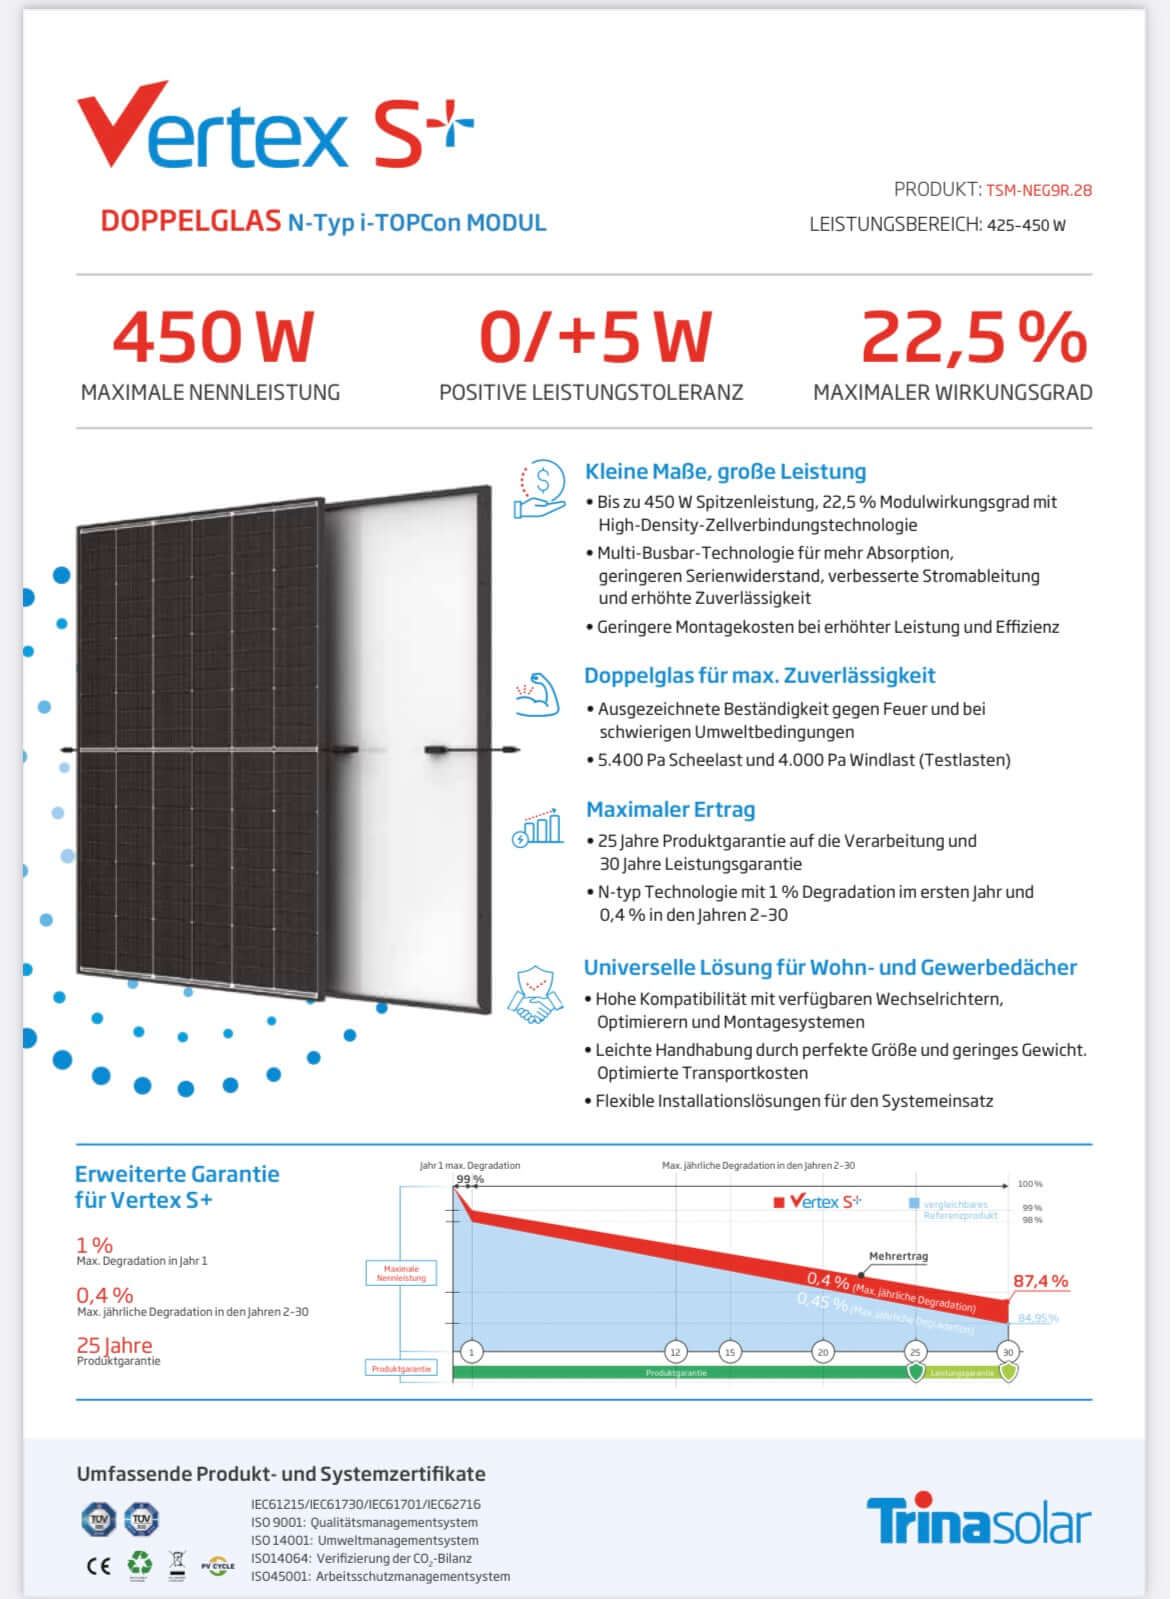 SOLARANLAGE 5,28 KWp ## 12x Solarmodul Trina Solar a 440W DG + Kostal Plenticore ##